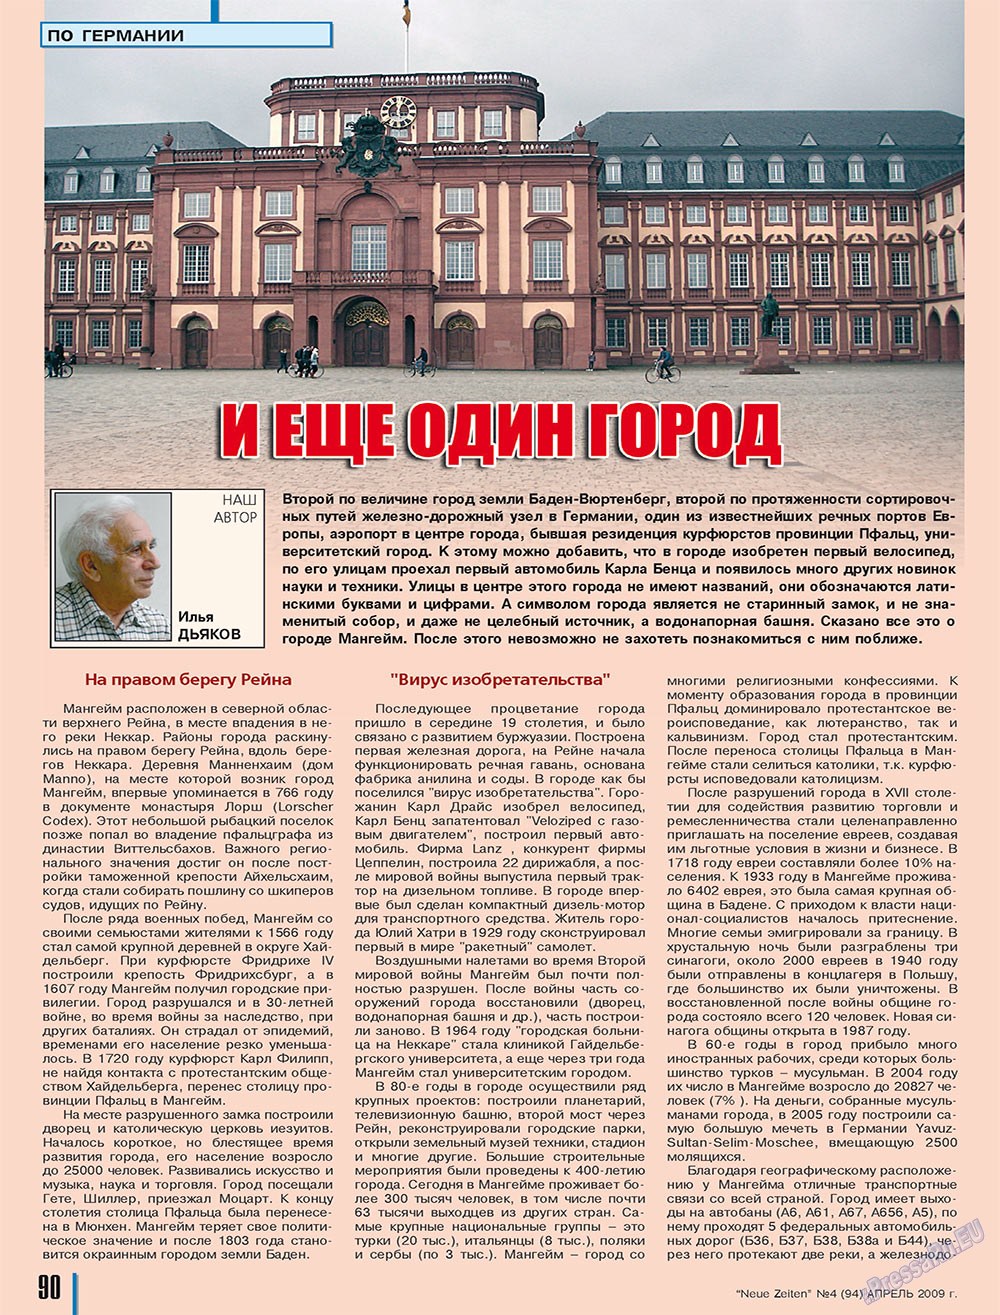 Neue Zeiten (журнал). 2009 год, номер 4, стр. 90